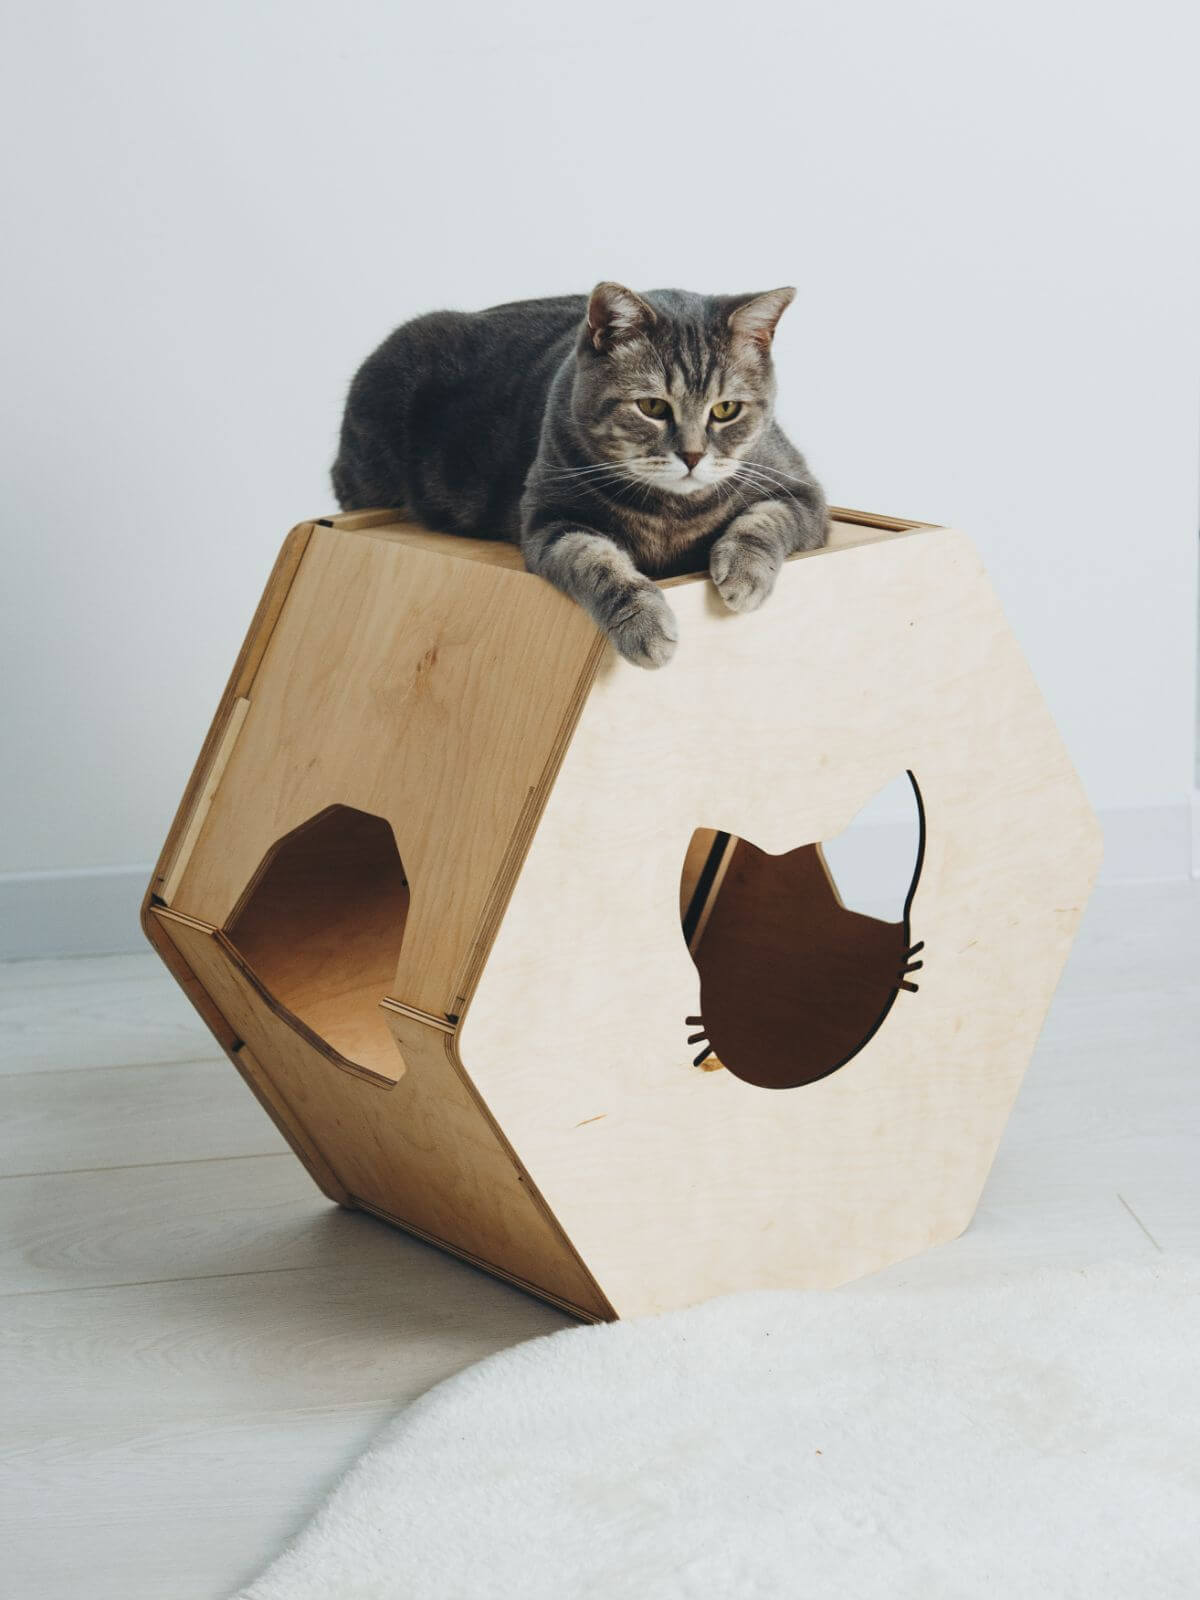 Hexagon Cat House